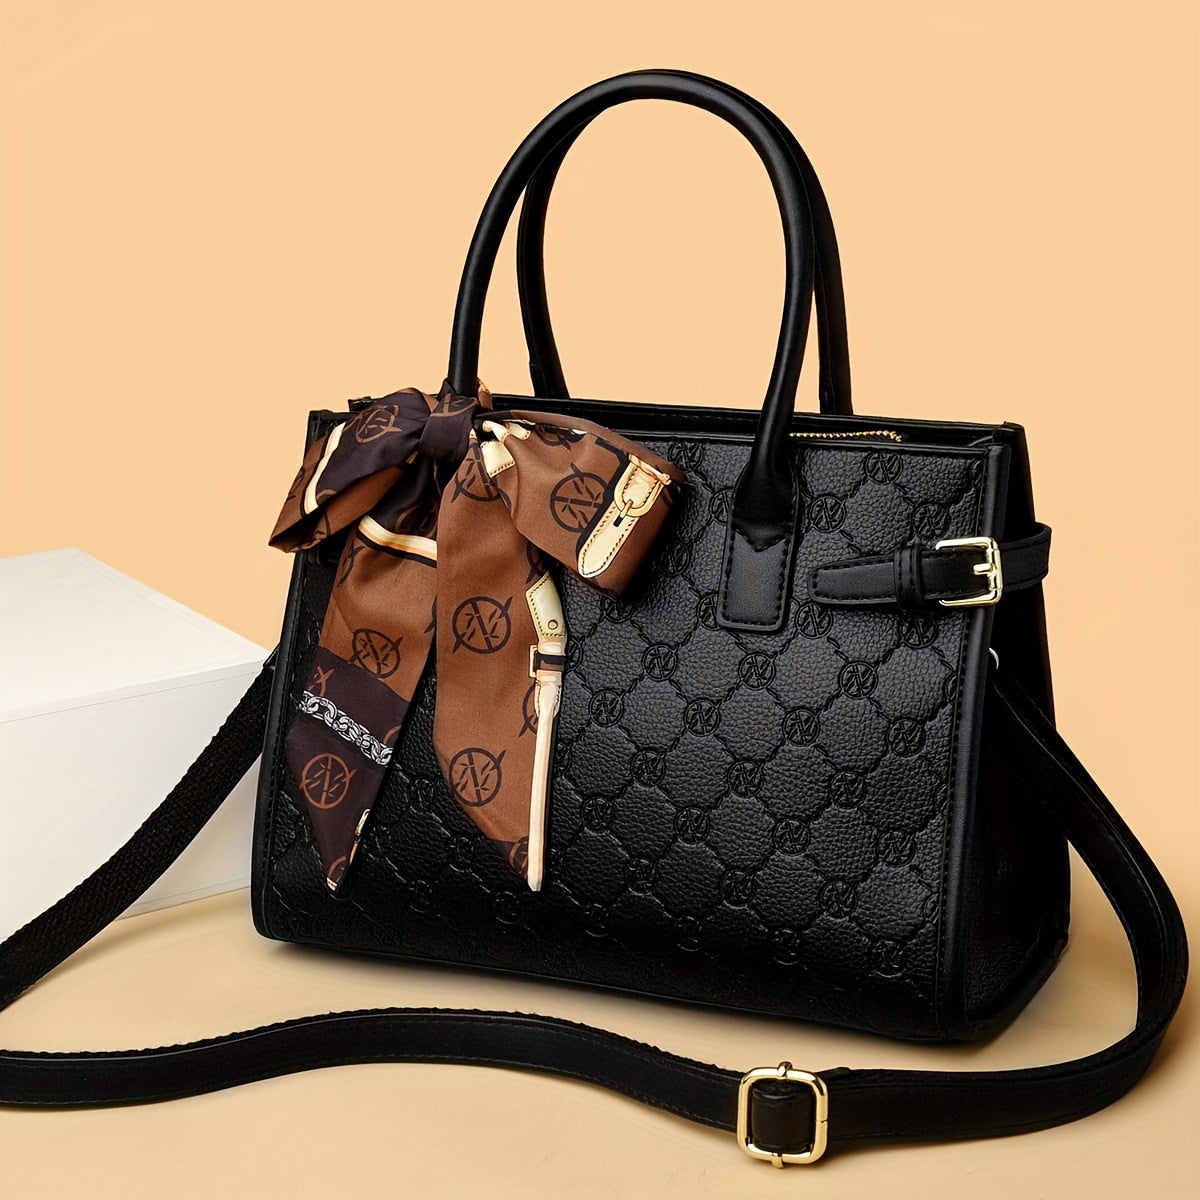 Classic Black Geometric Pattern Handbag, Scarf Decor Top Handle Handbag, PU Leather Elegant Shoulder Bag